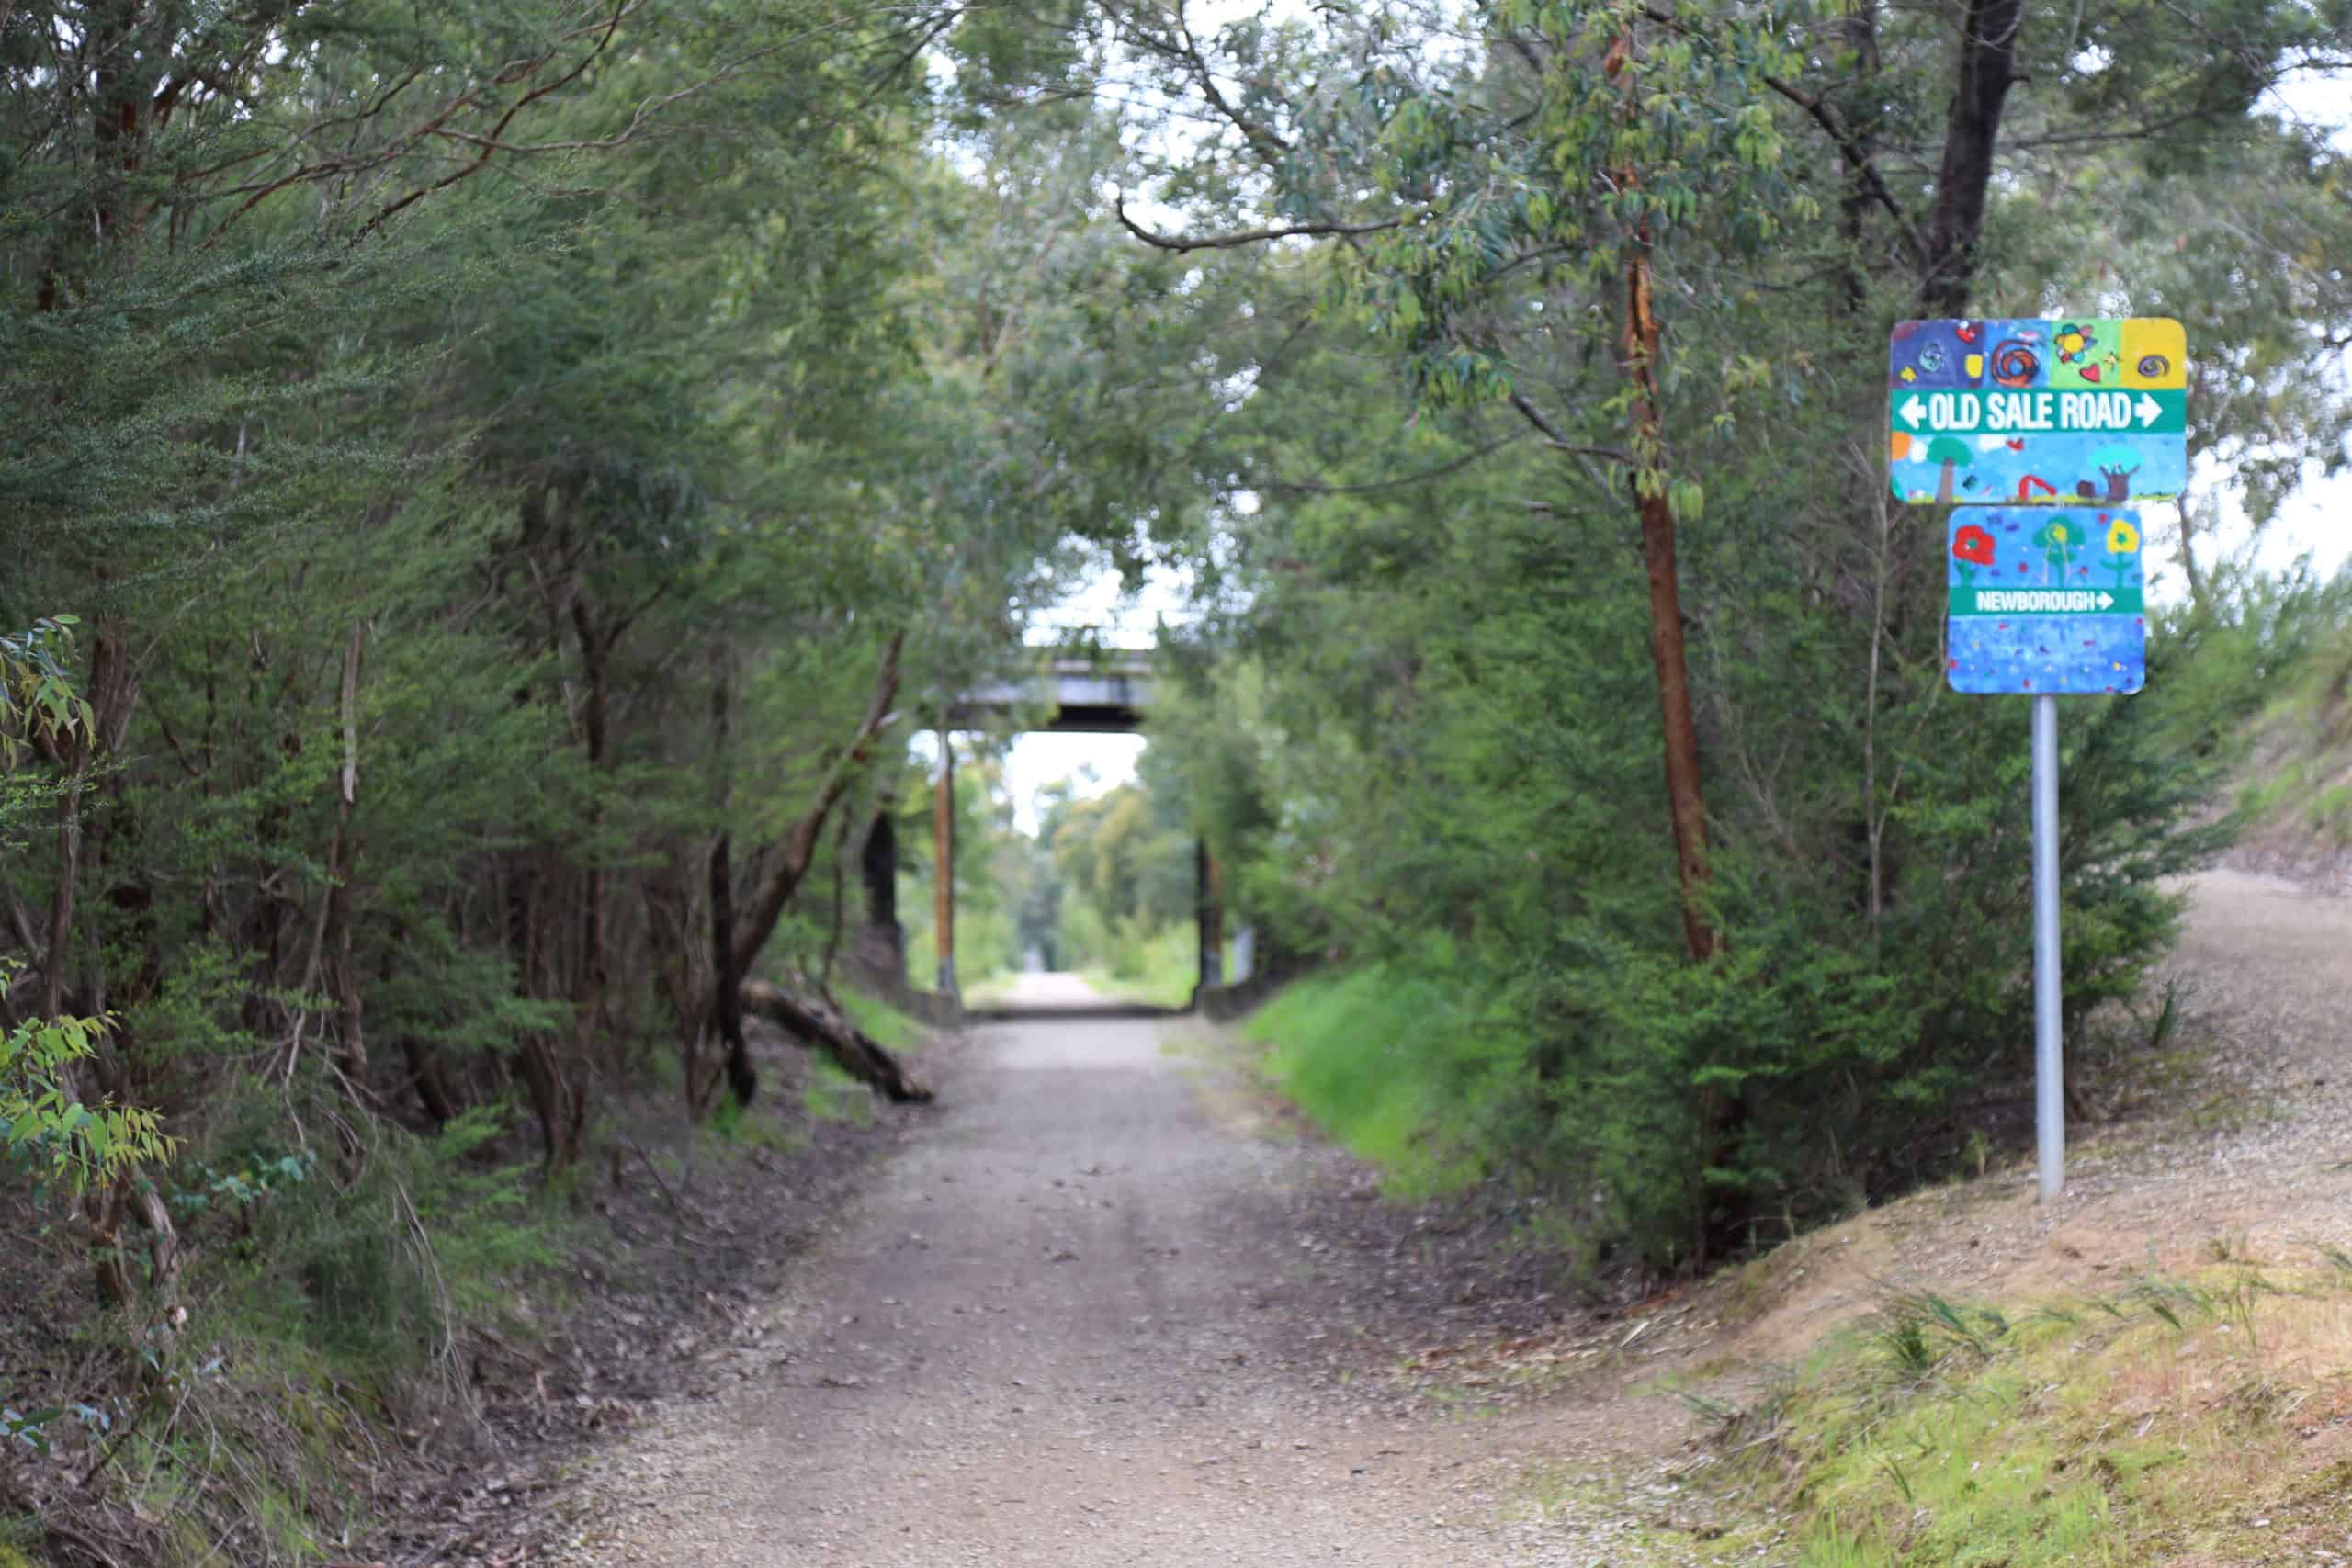 Best things to do in Latrobe Valley Australia Tegan Dawson - Moe Yallourn Rail Trail under Old Sale Road Newborough